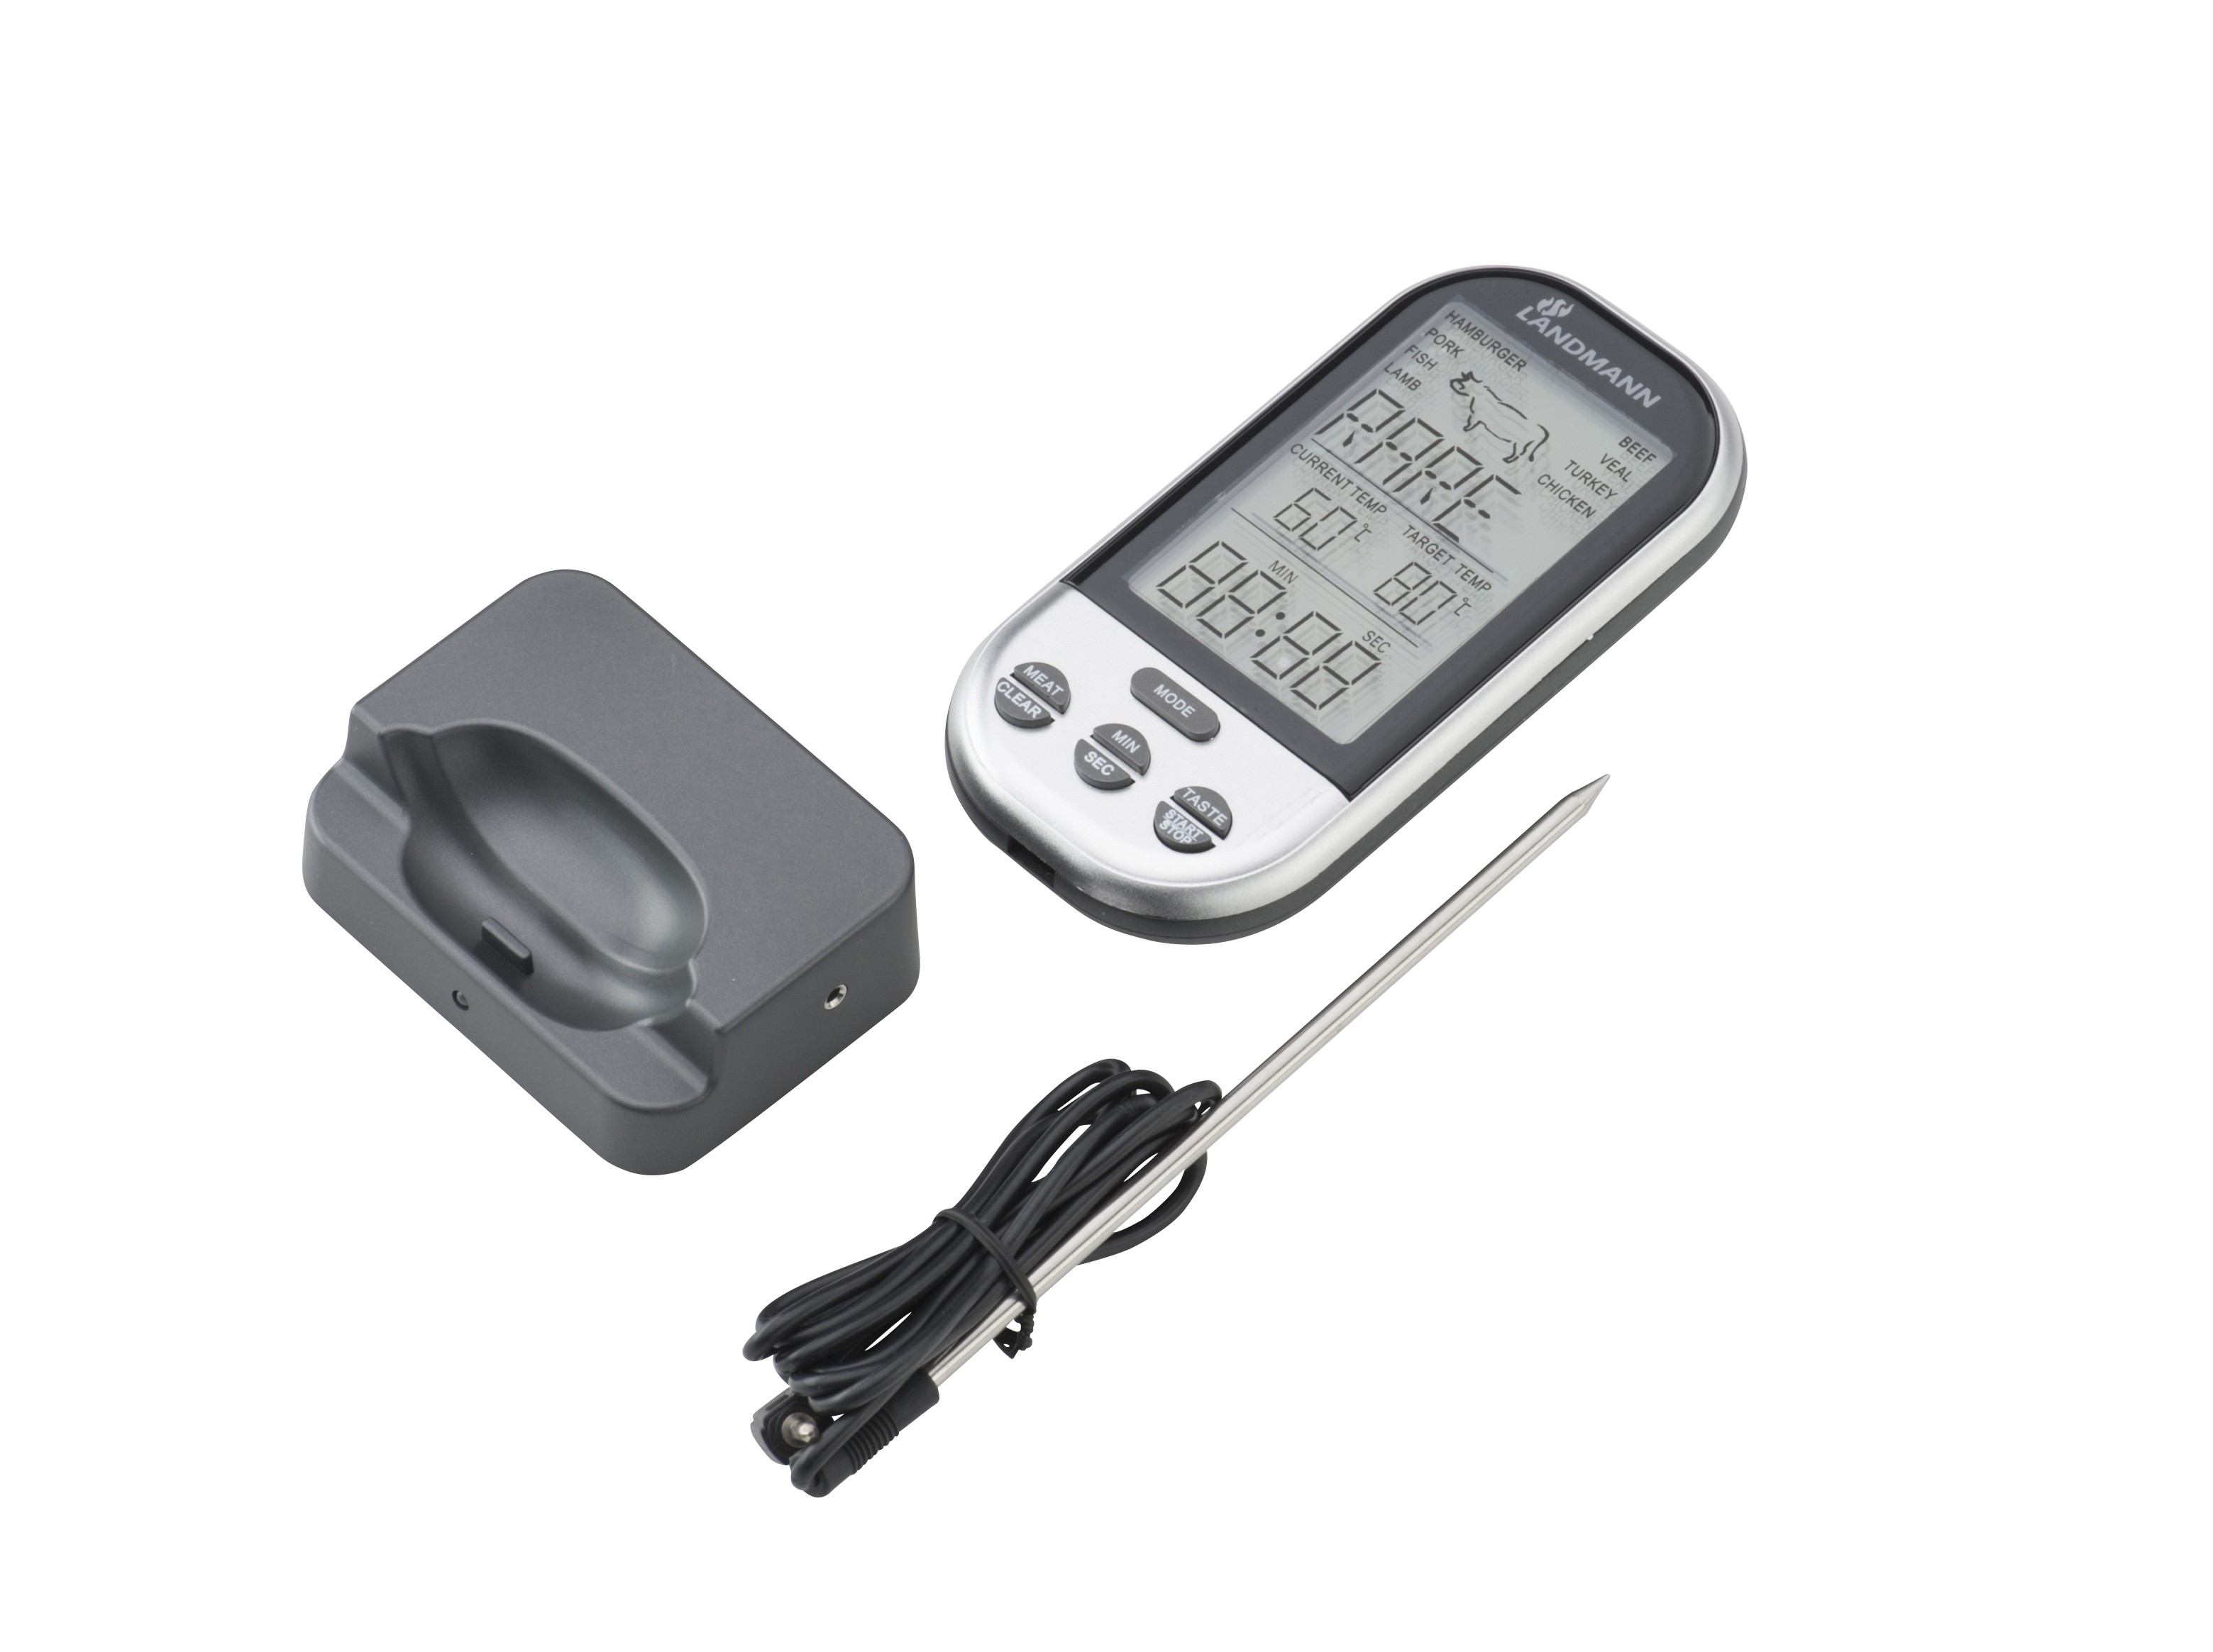 Landmann Digital Thermometer